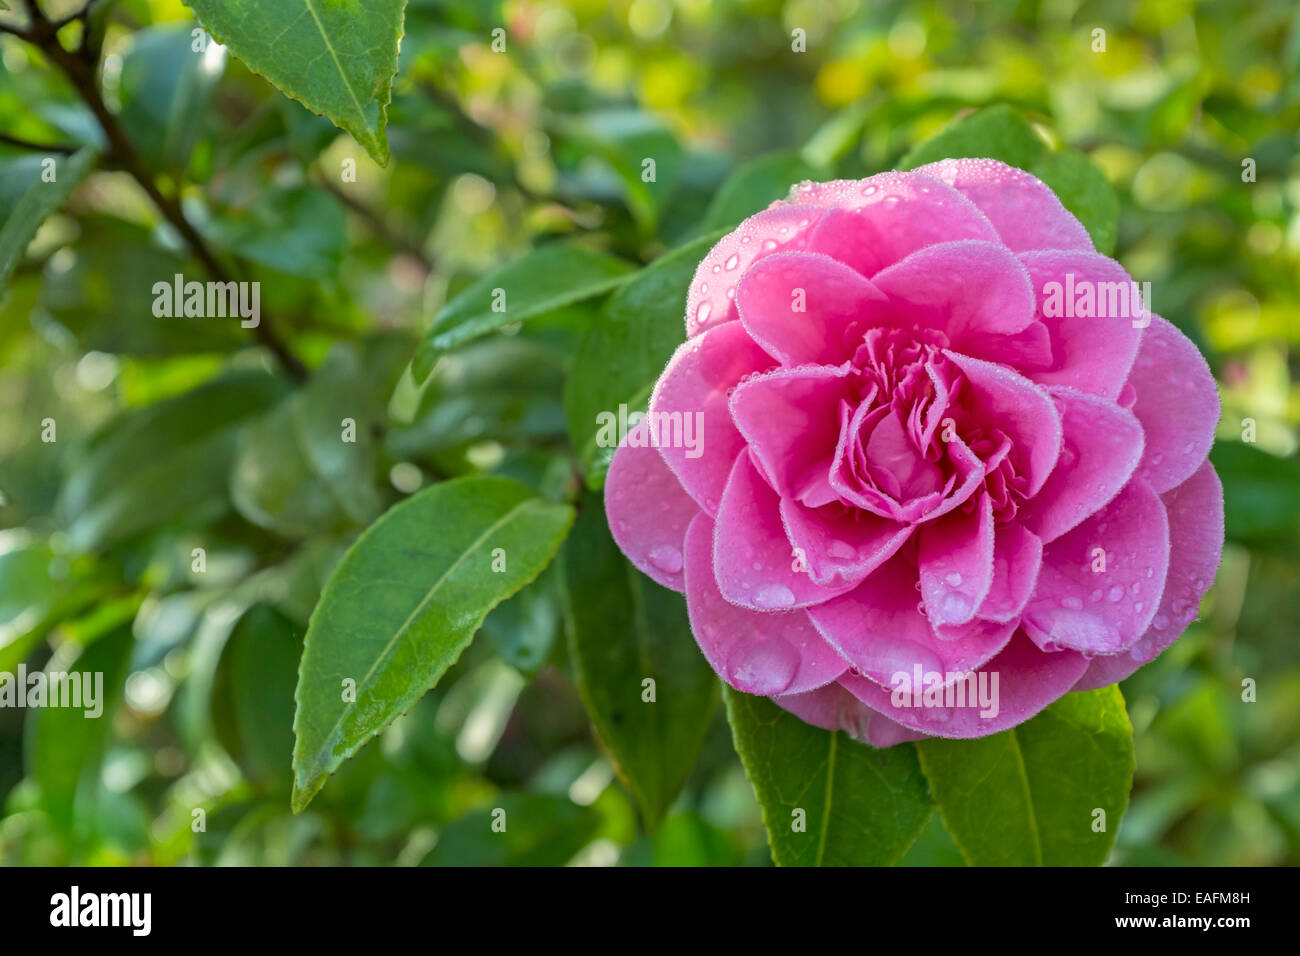 Rosa flor de camelia. Foto de stock